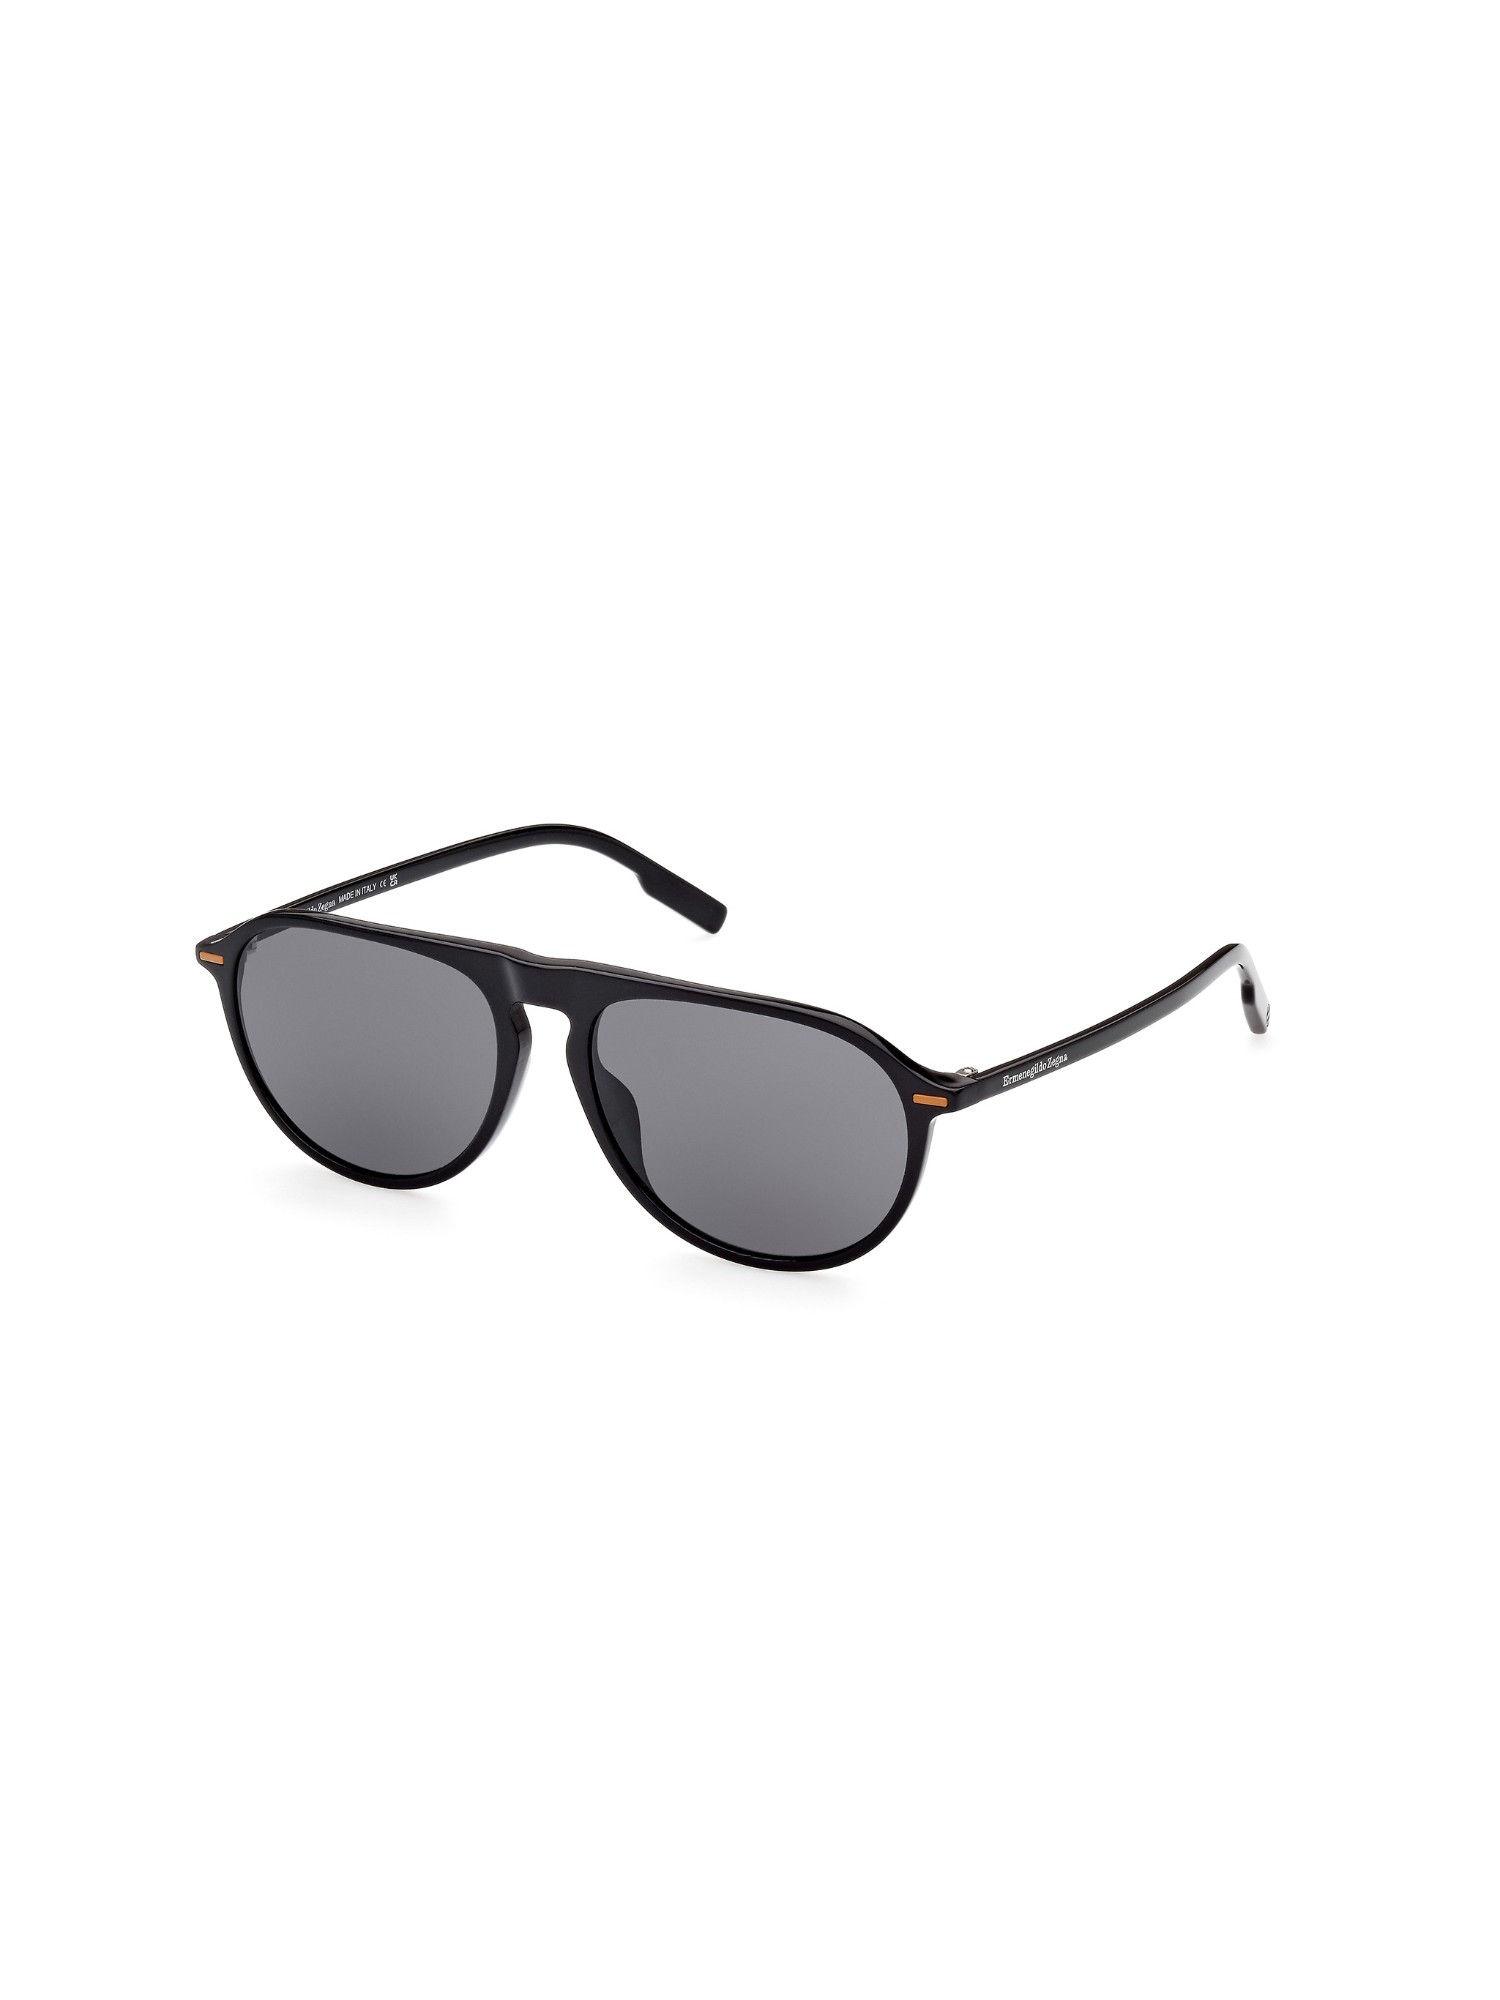 ez0202 uv protected oval sunglasses for men